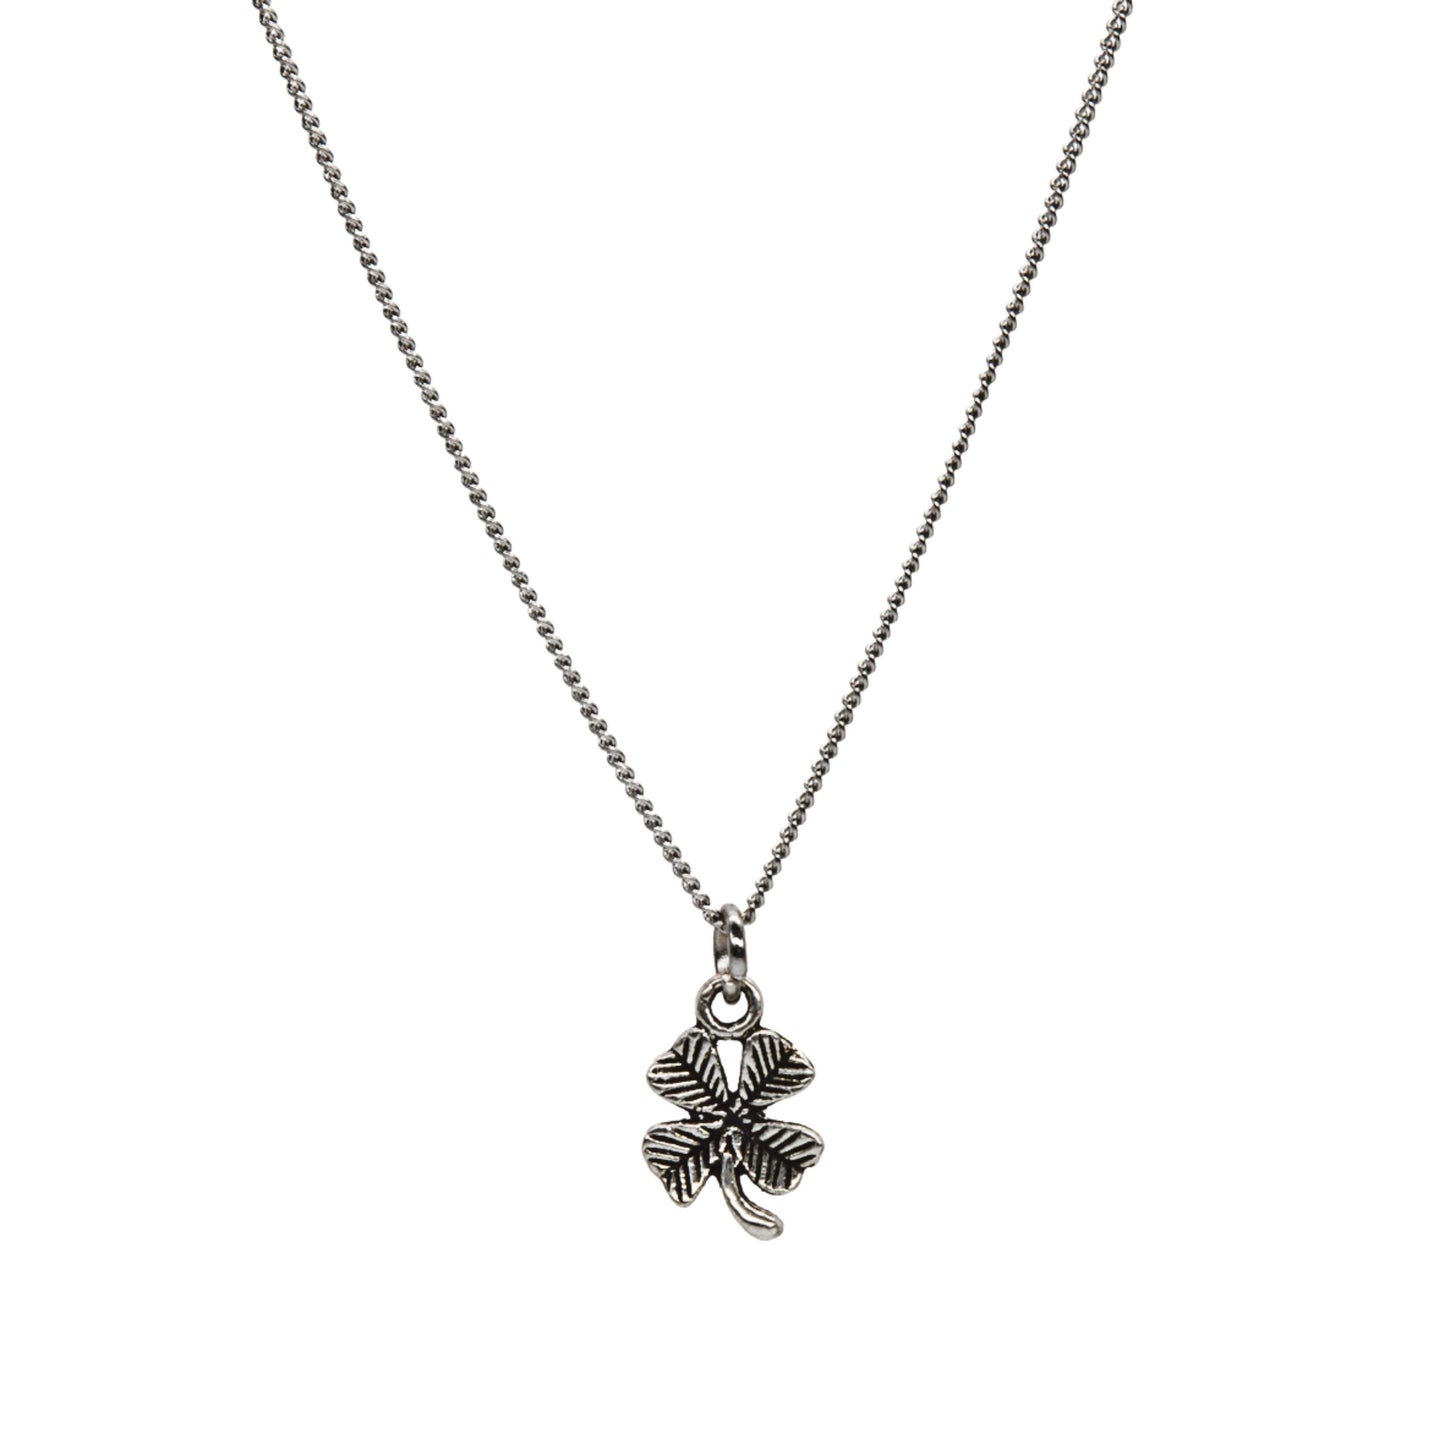 Silver Clover Necklace - Adjustable Length